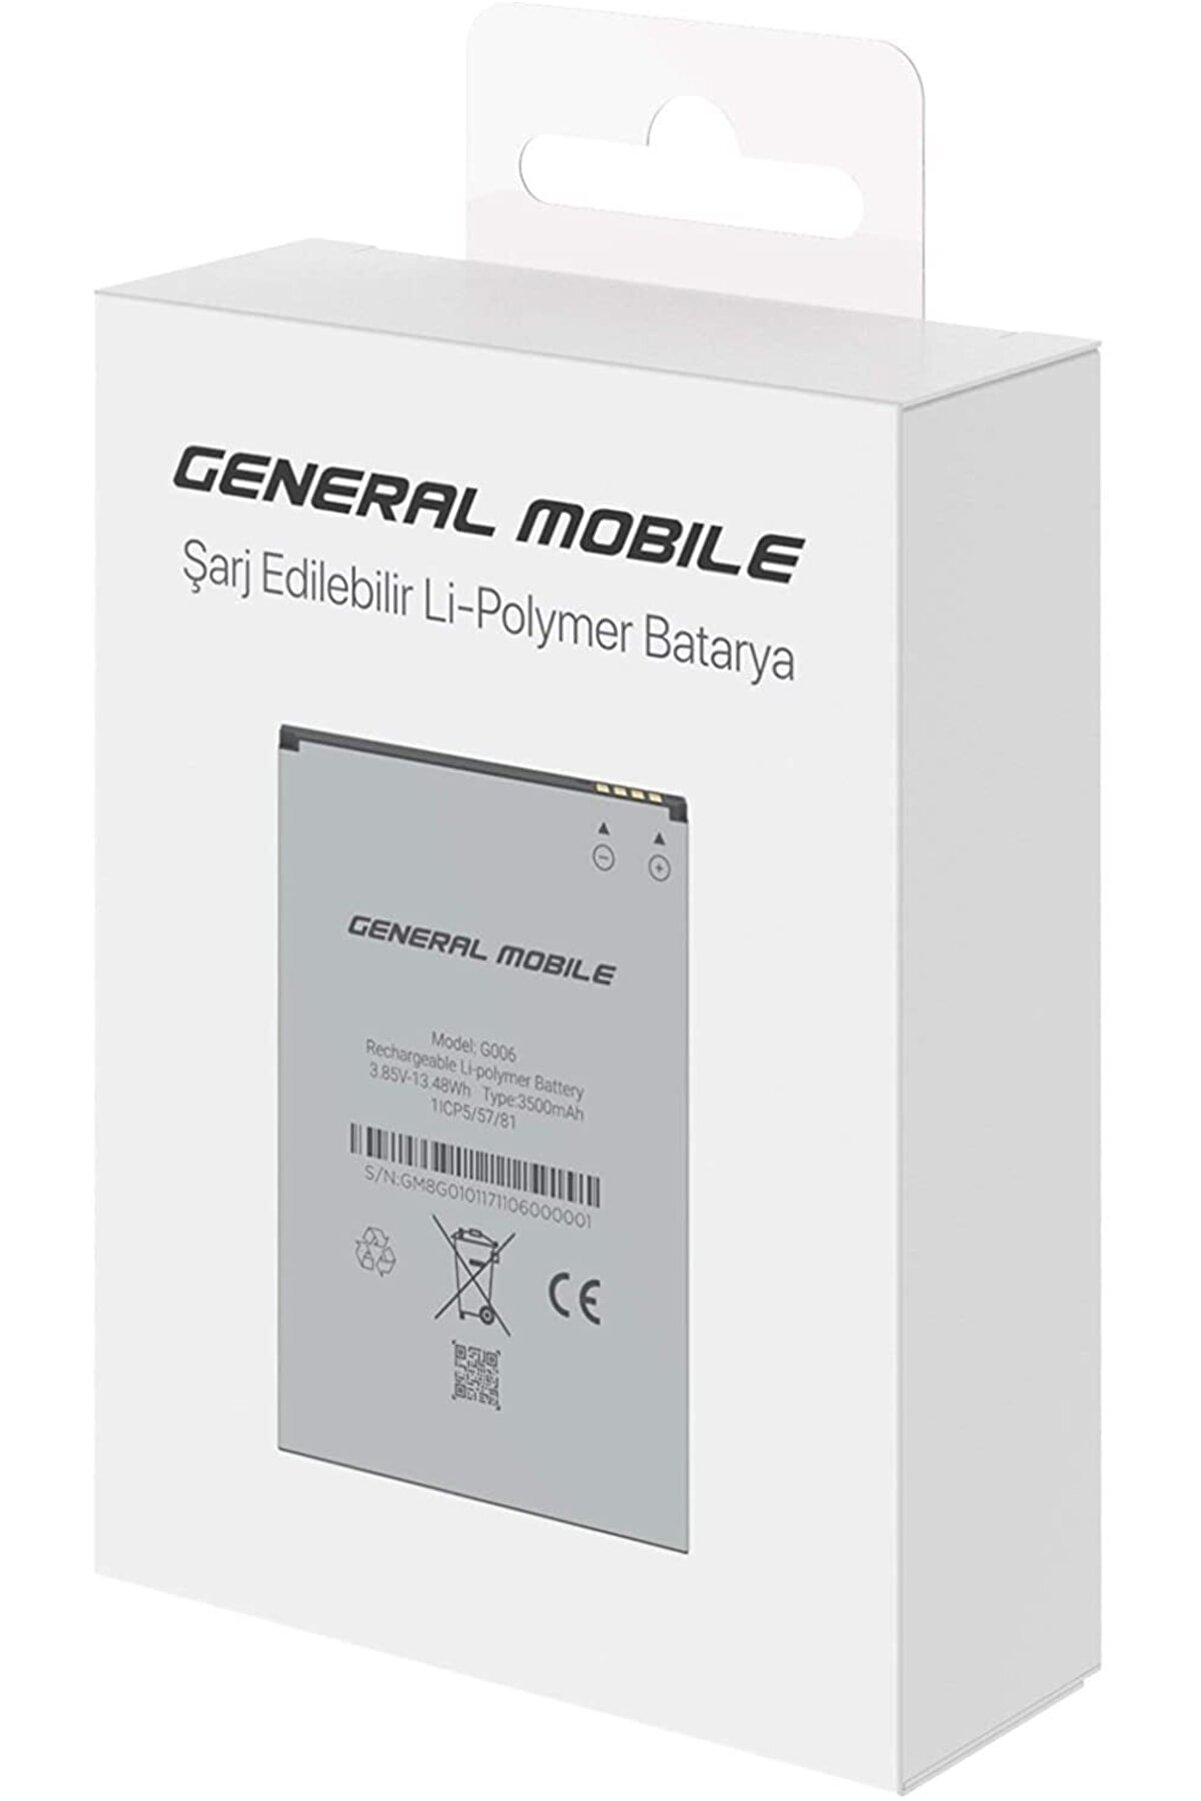 General Mobile Gm8 Go Gm9 Go Batarya